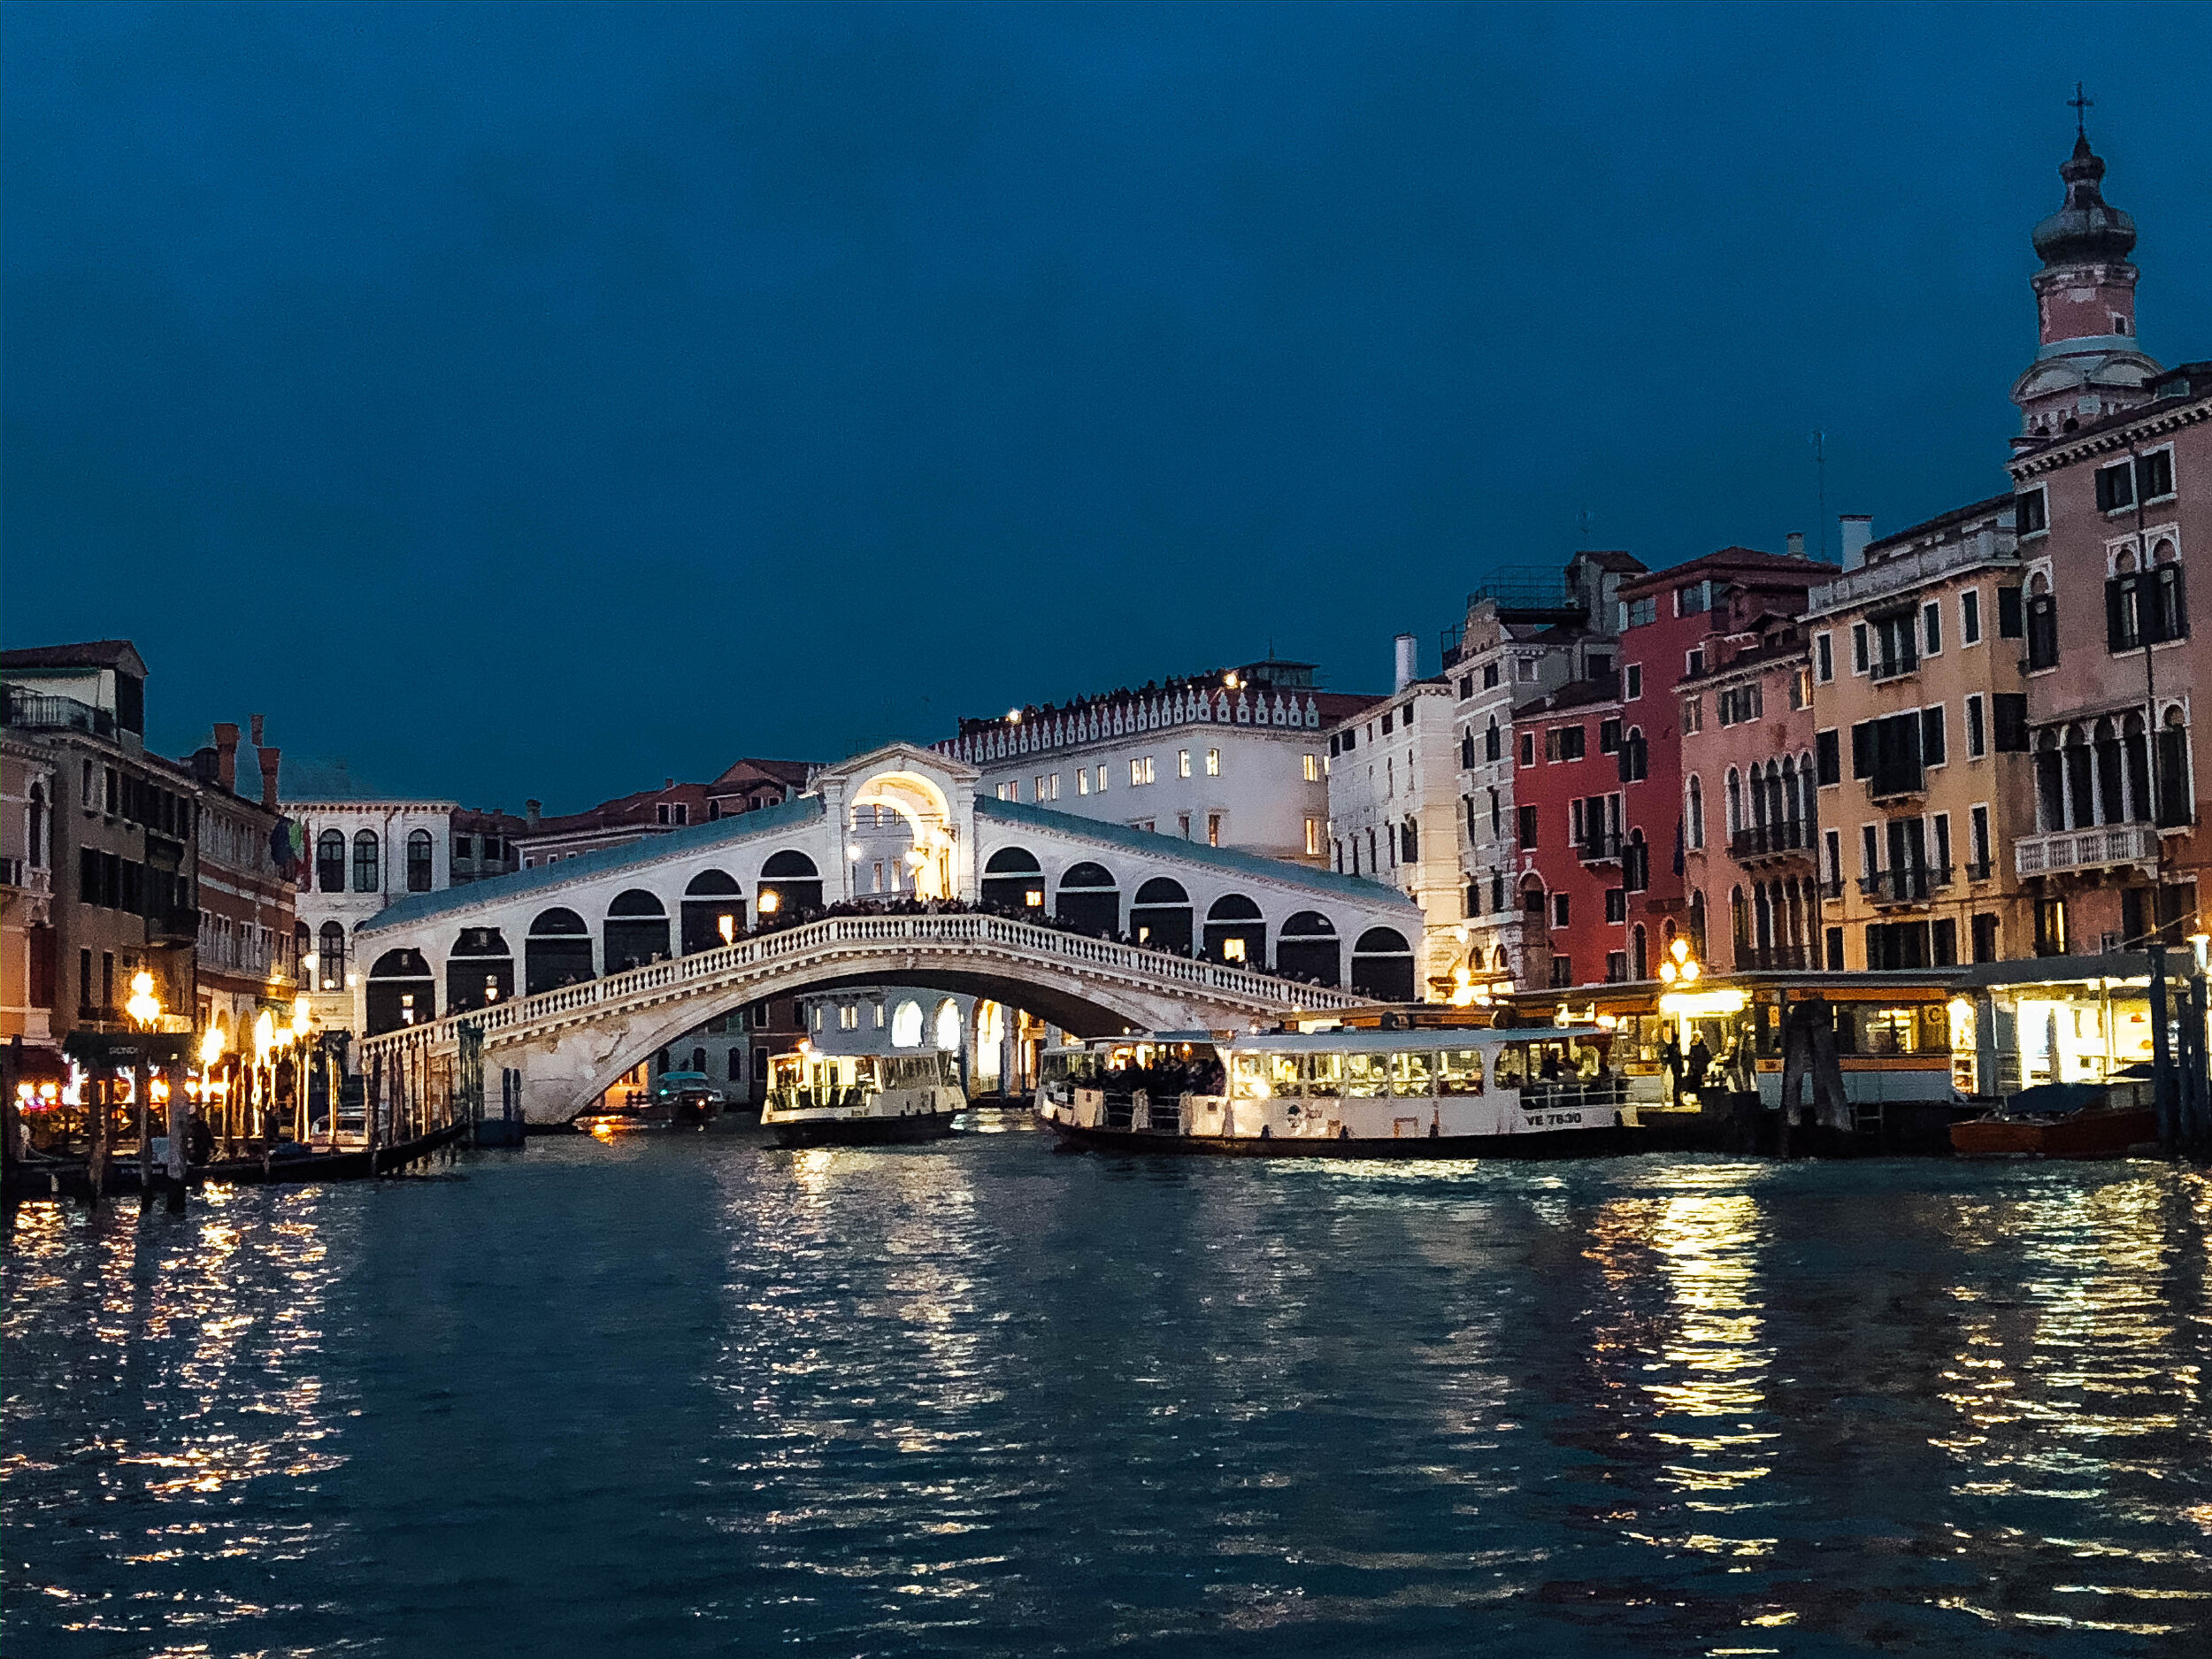 Rialto Bridge at night in Venice, Italy